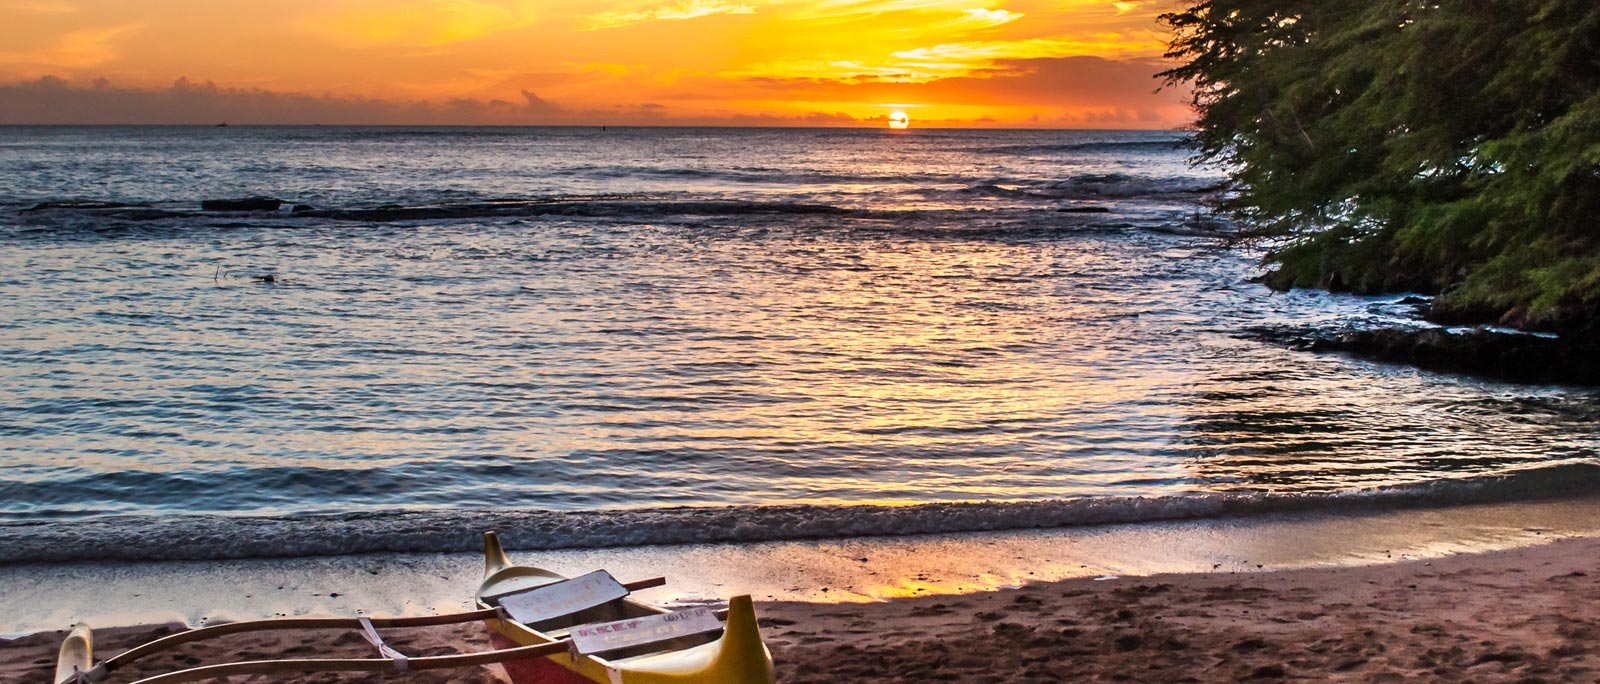 view of hawaii sunset